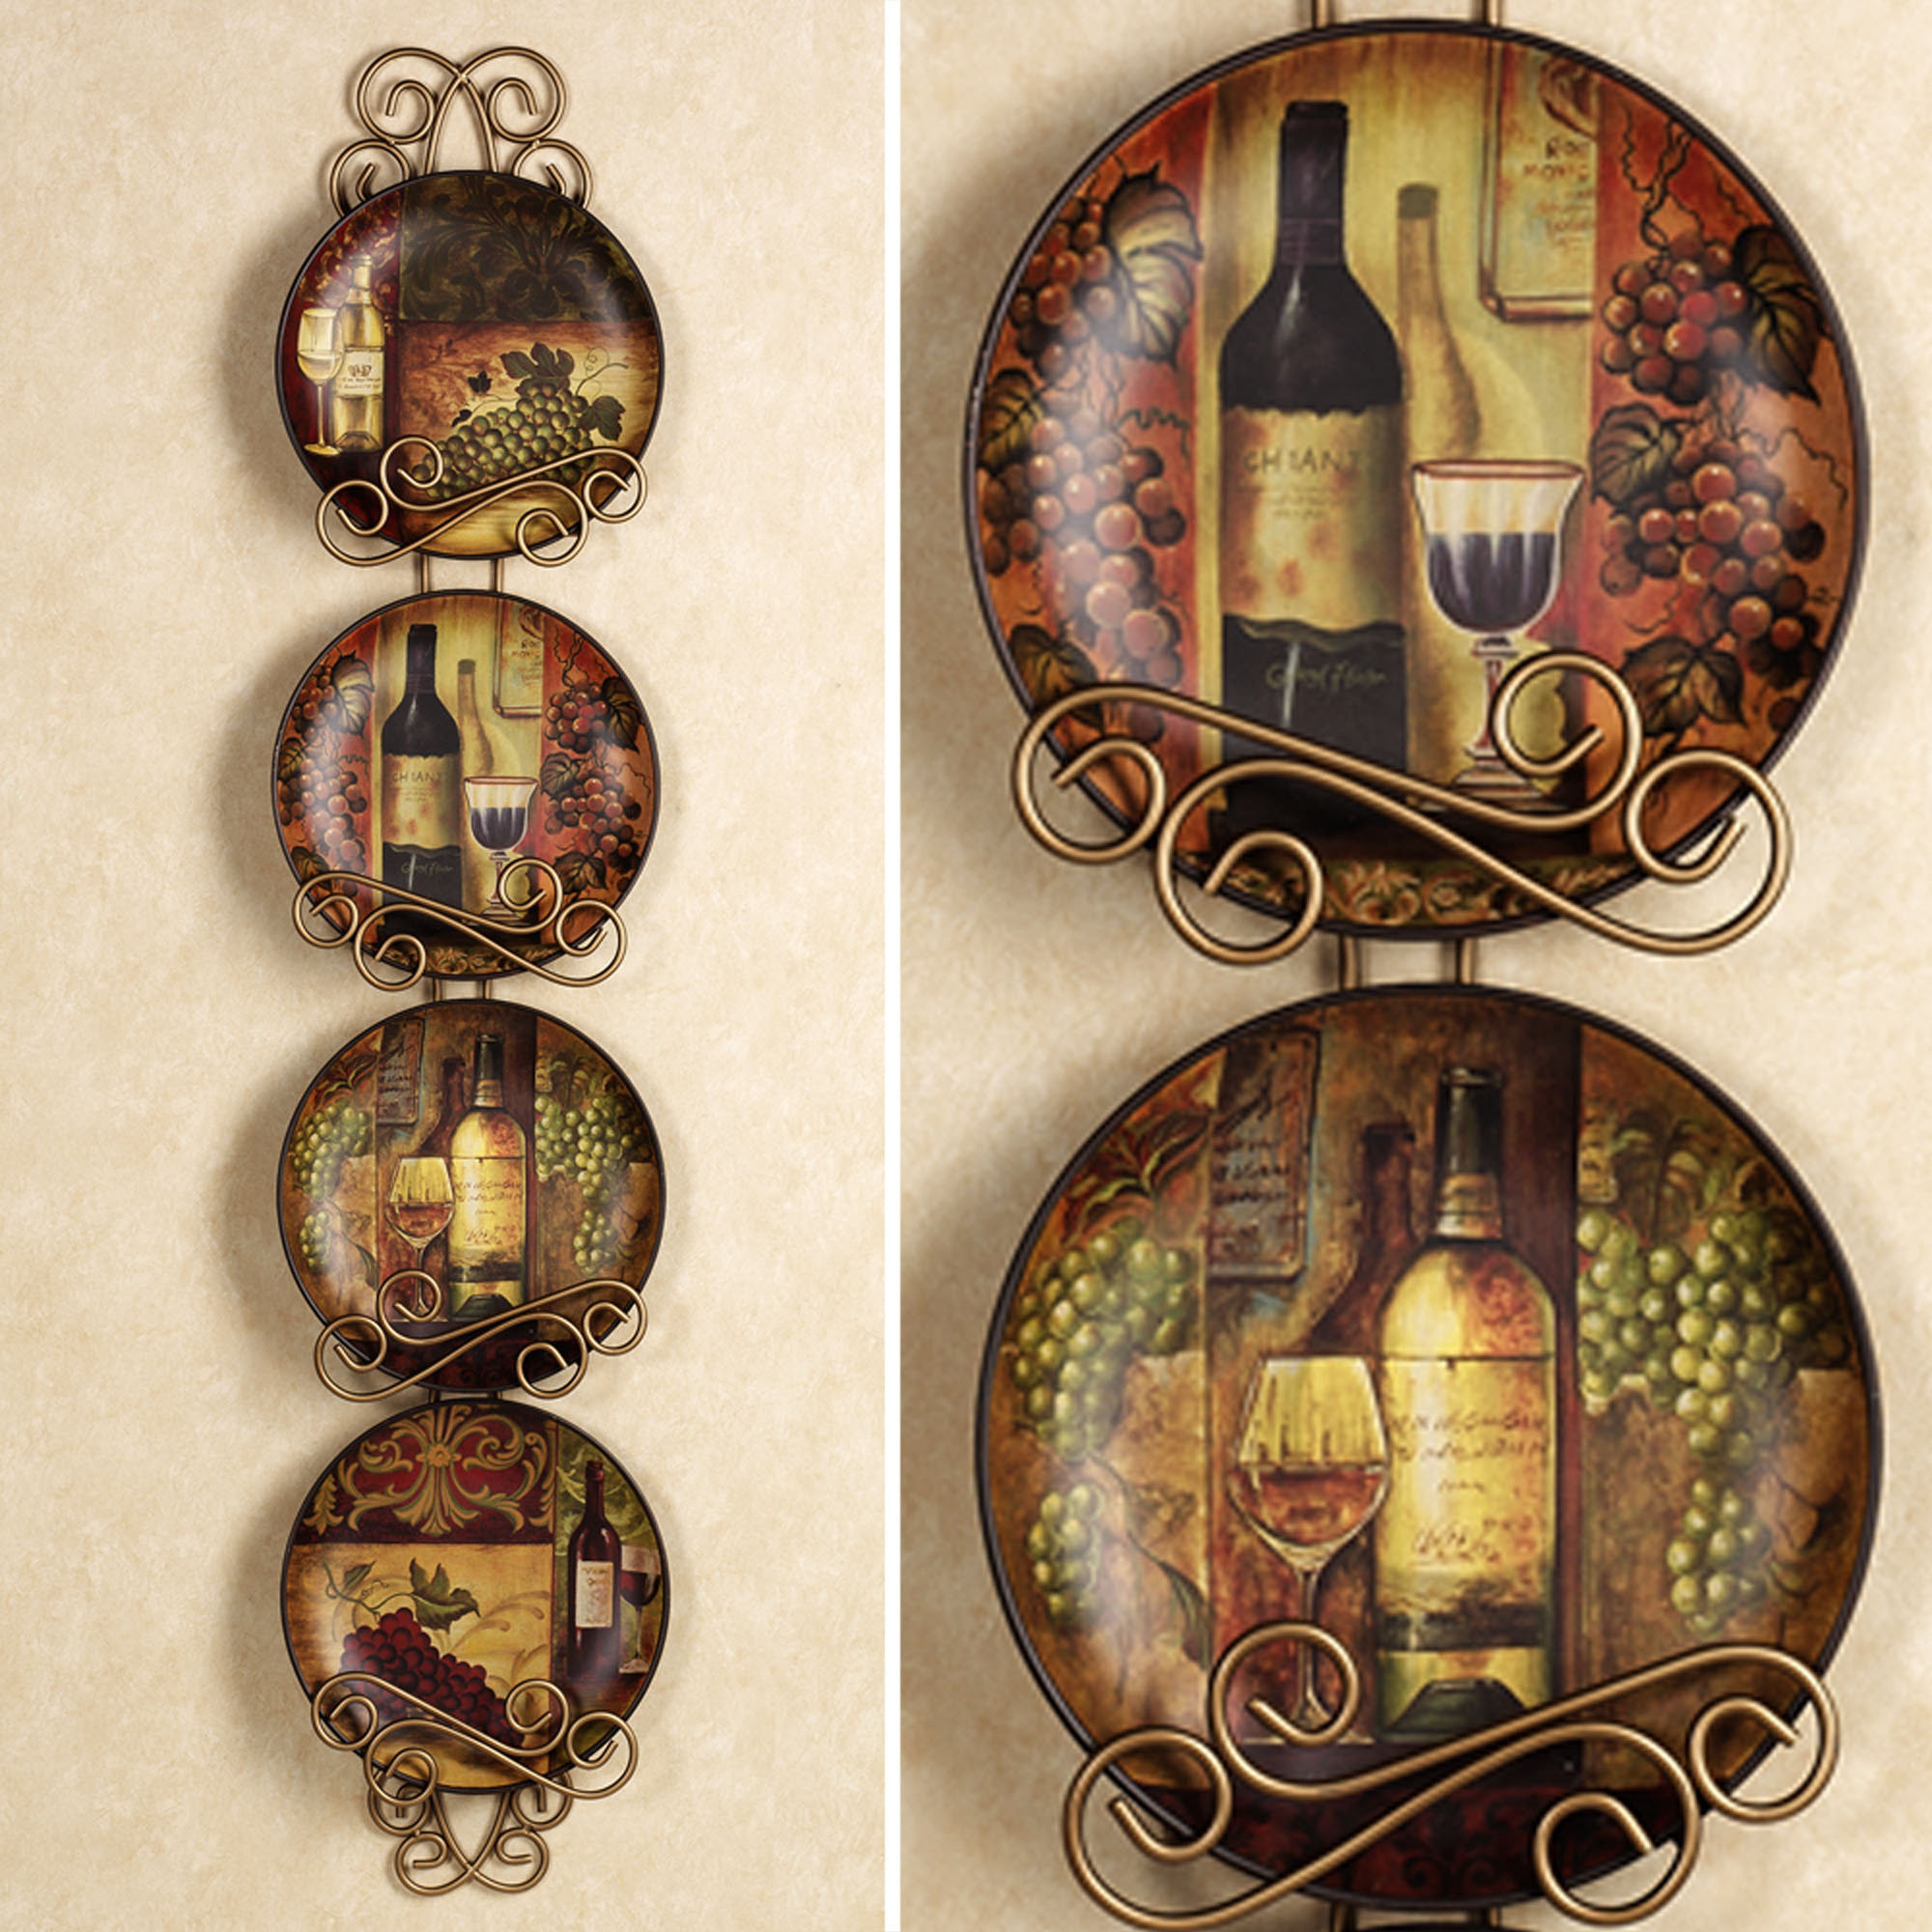 Decorative Plates For Kitchen Wall
 Decorative Hanging Wall Plates & Decorative Plates For